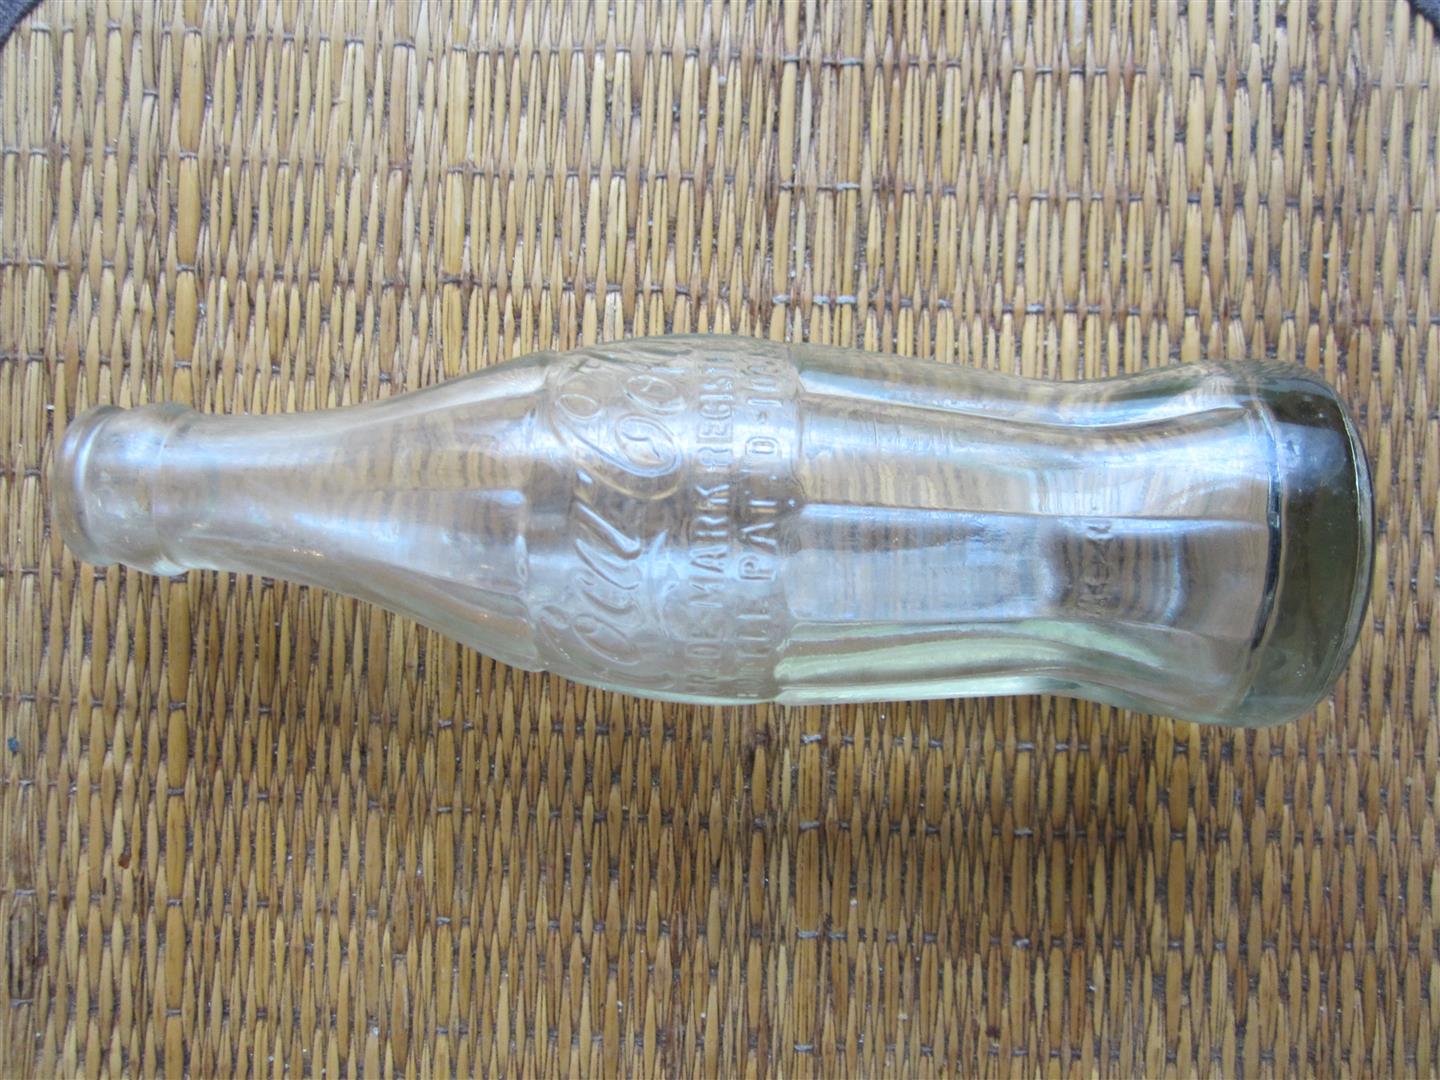 WW2 U.S. Coca Cola Bottle - 1944